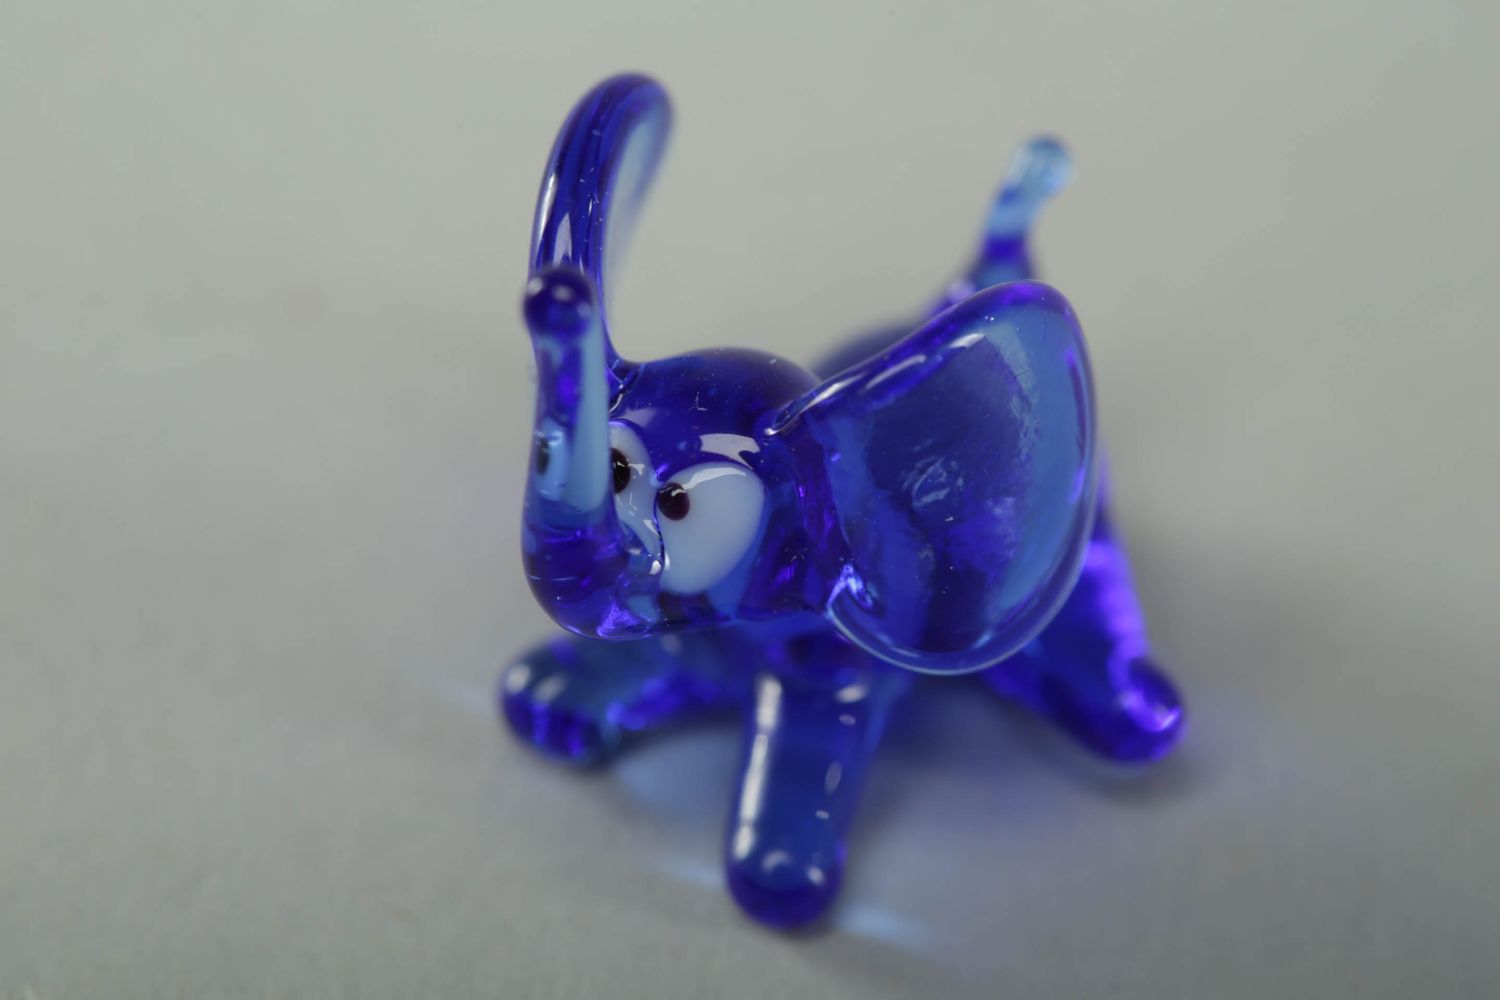 Figura de cristal con forma de elefante en técnica de lampwork foto 2